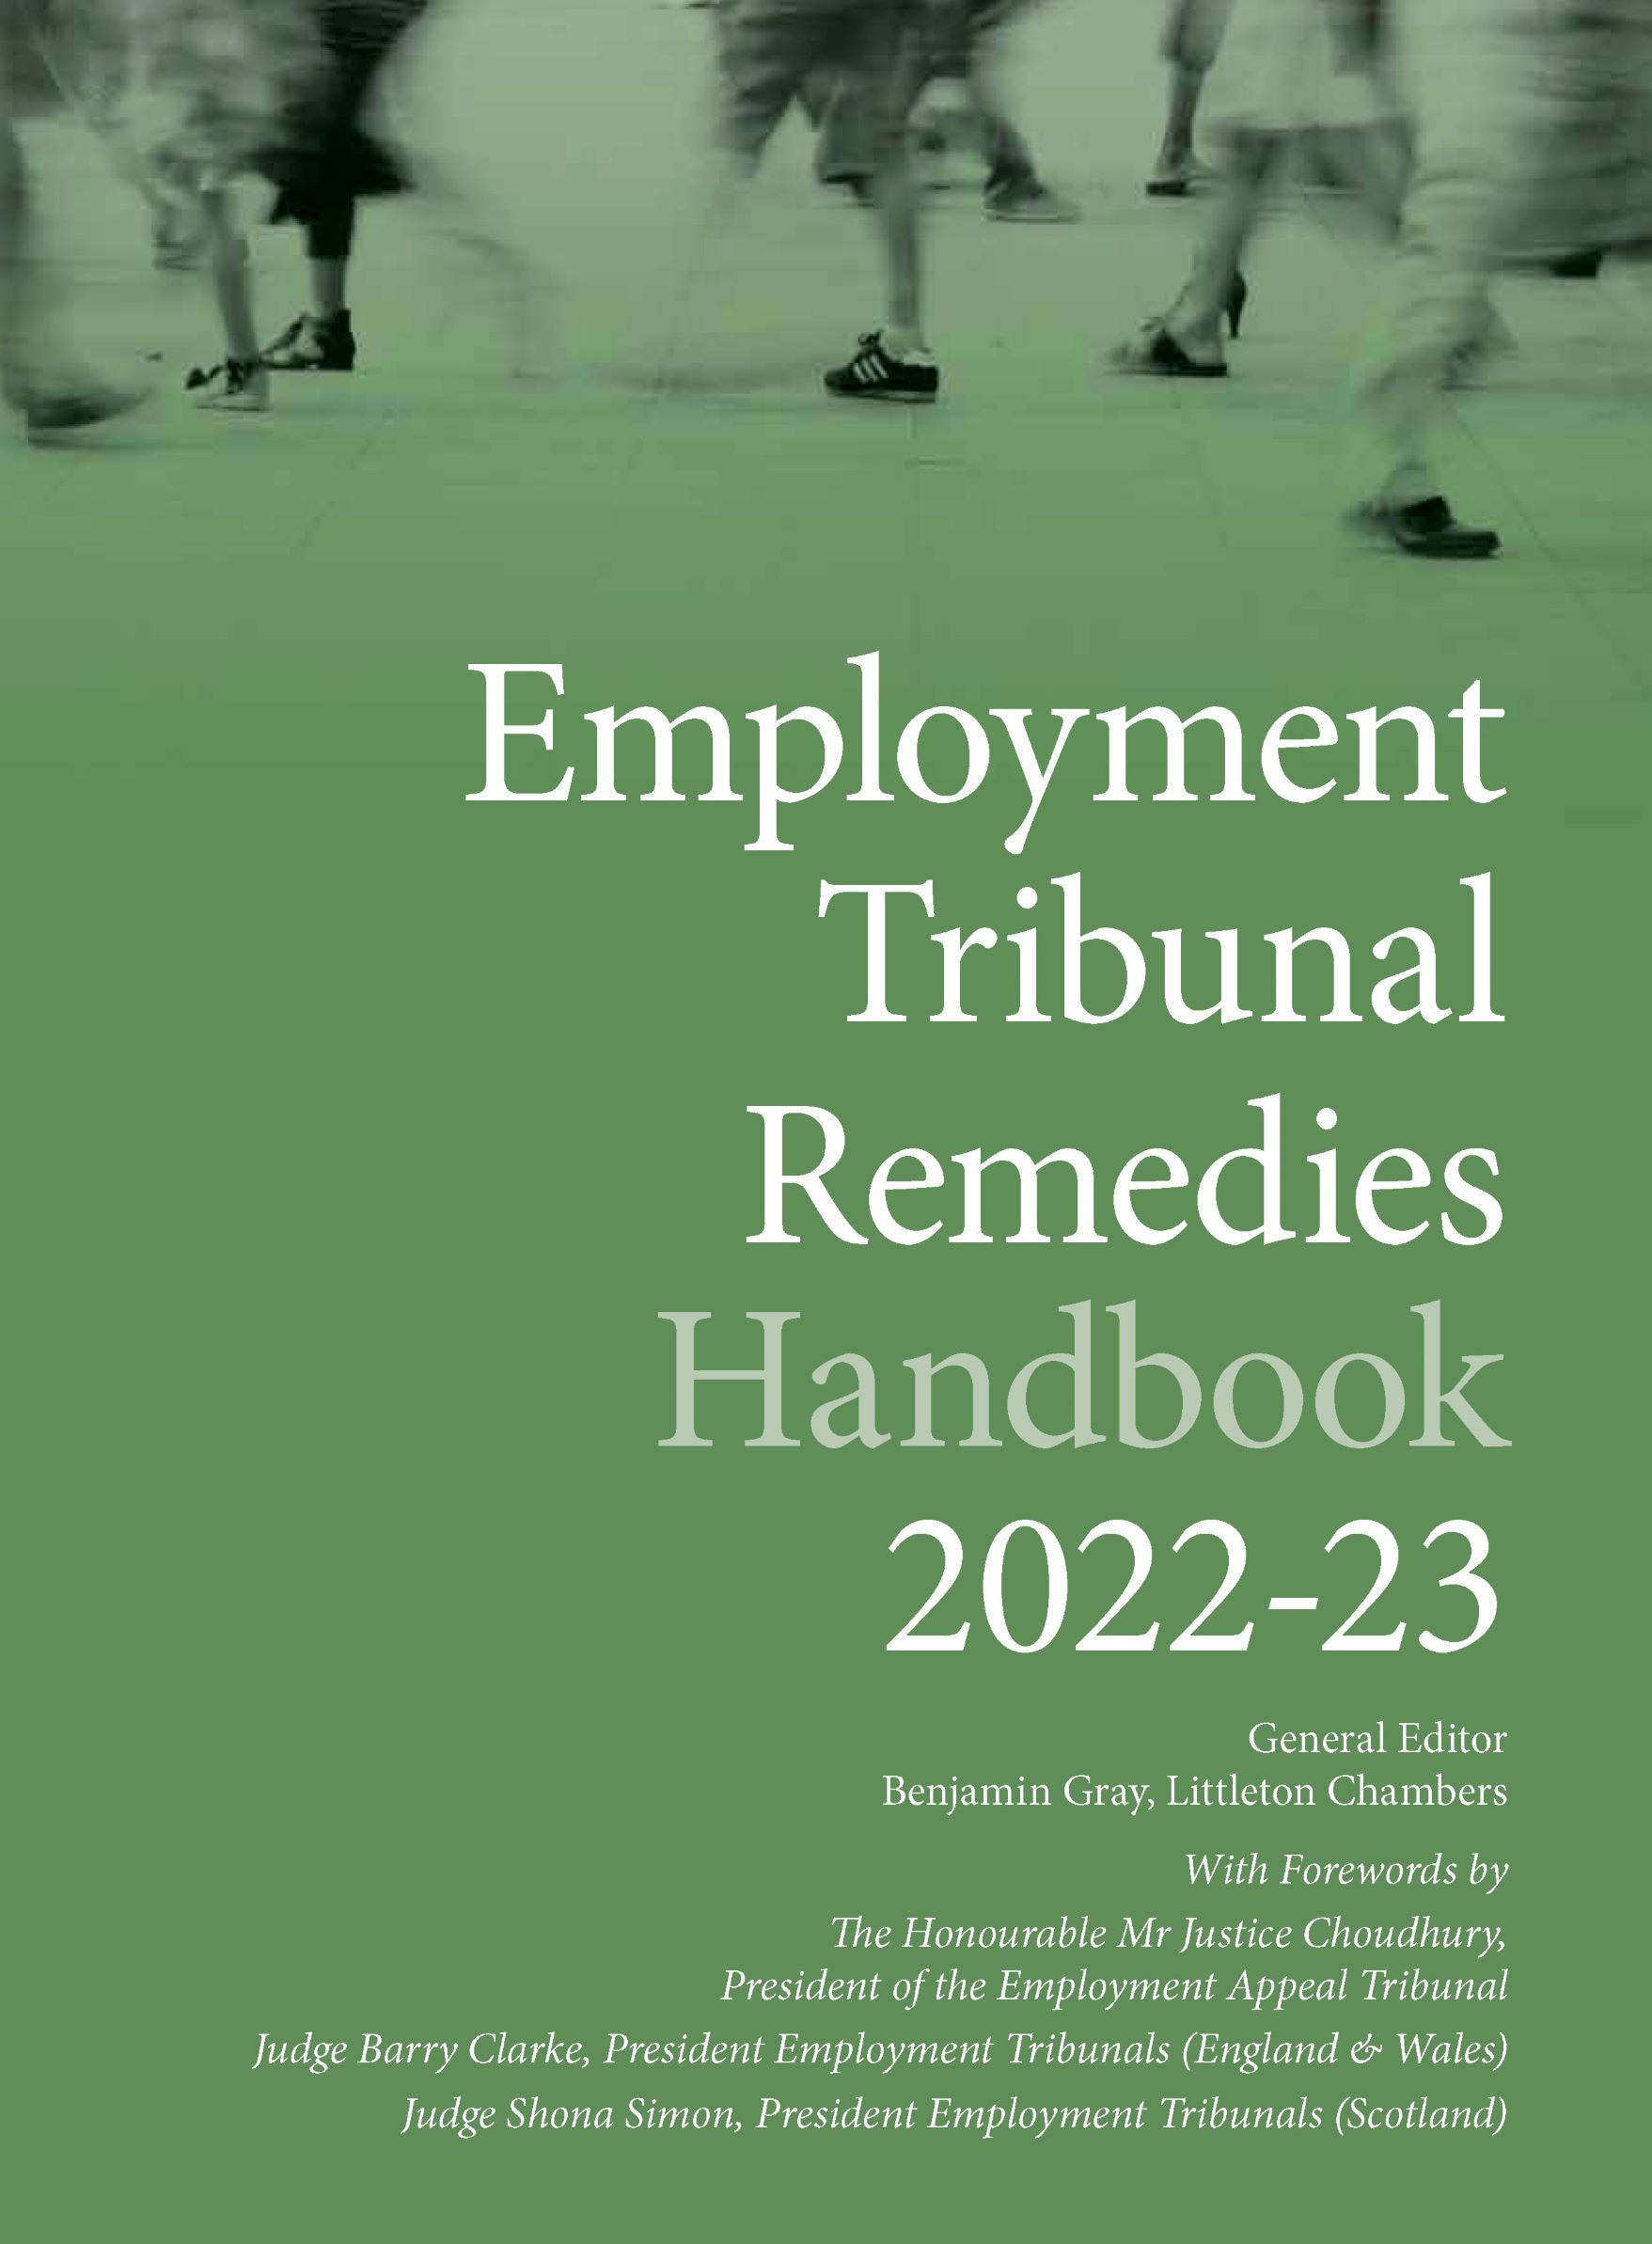 Employment Tribunal Remedies Handbook 2022-23: Download the digital edition now